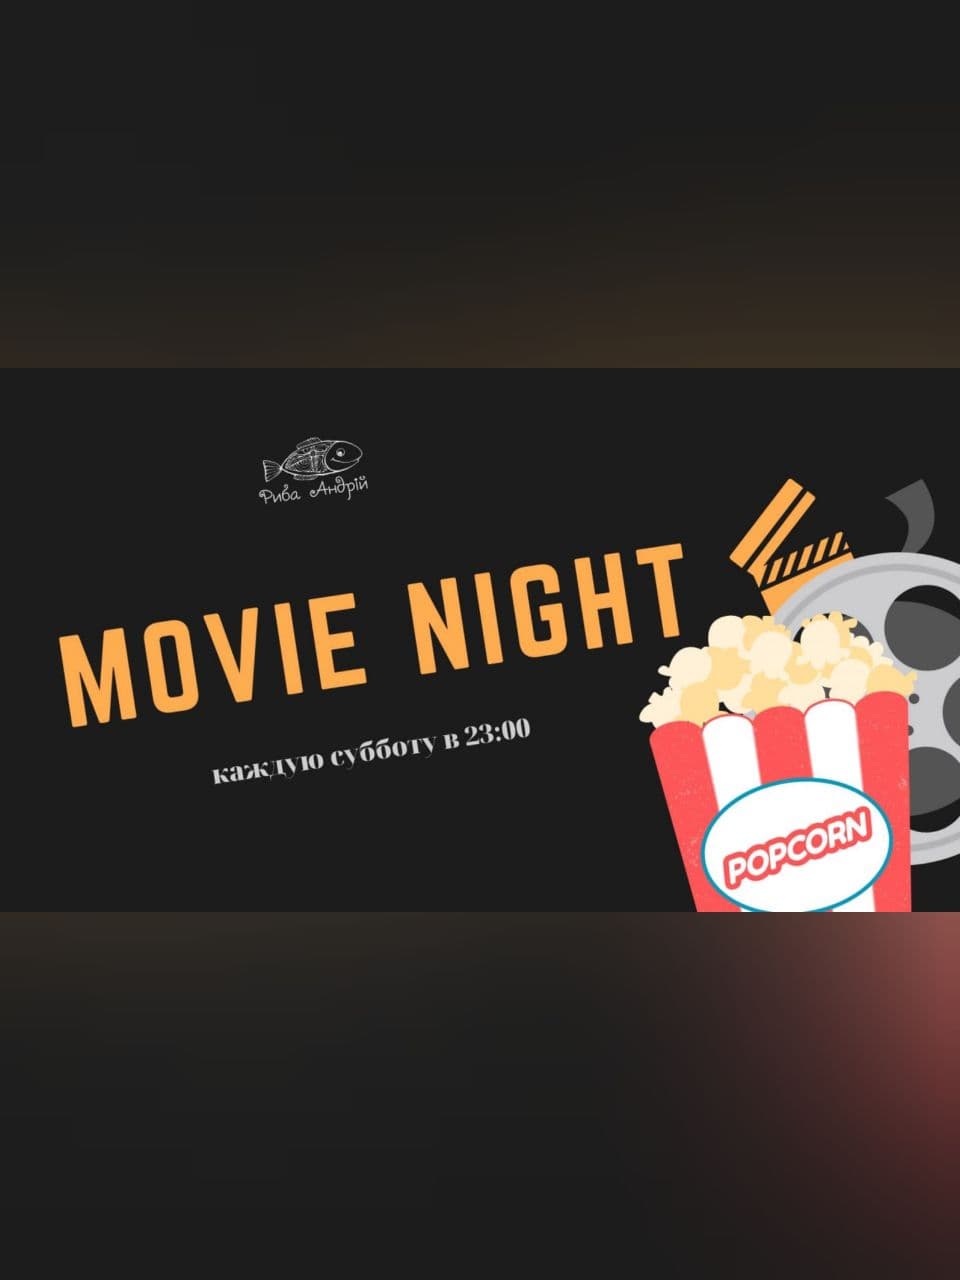 Movie Night Днепр, 05.12.2020, цена, фото, расписание, даты, купить билеты. Афиша Днепра